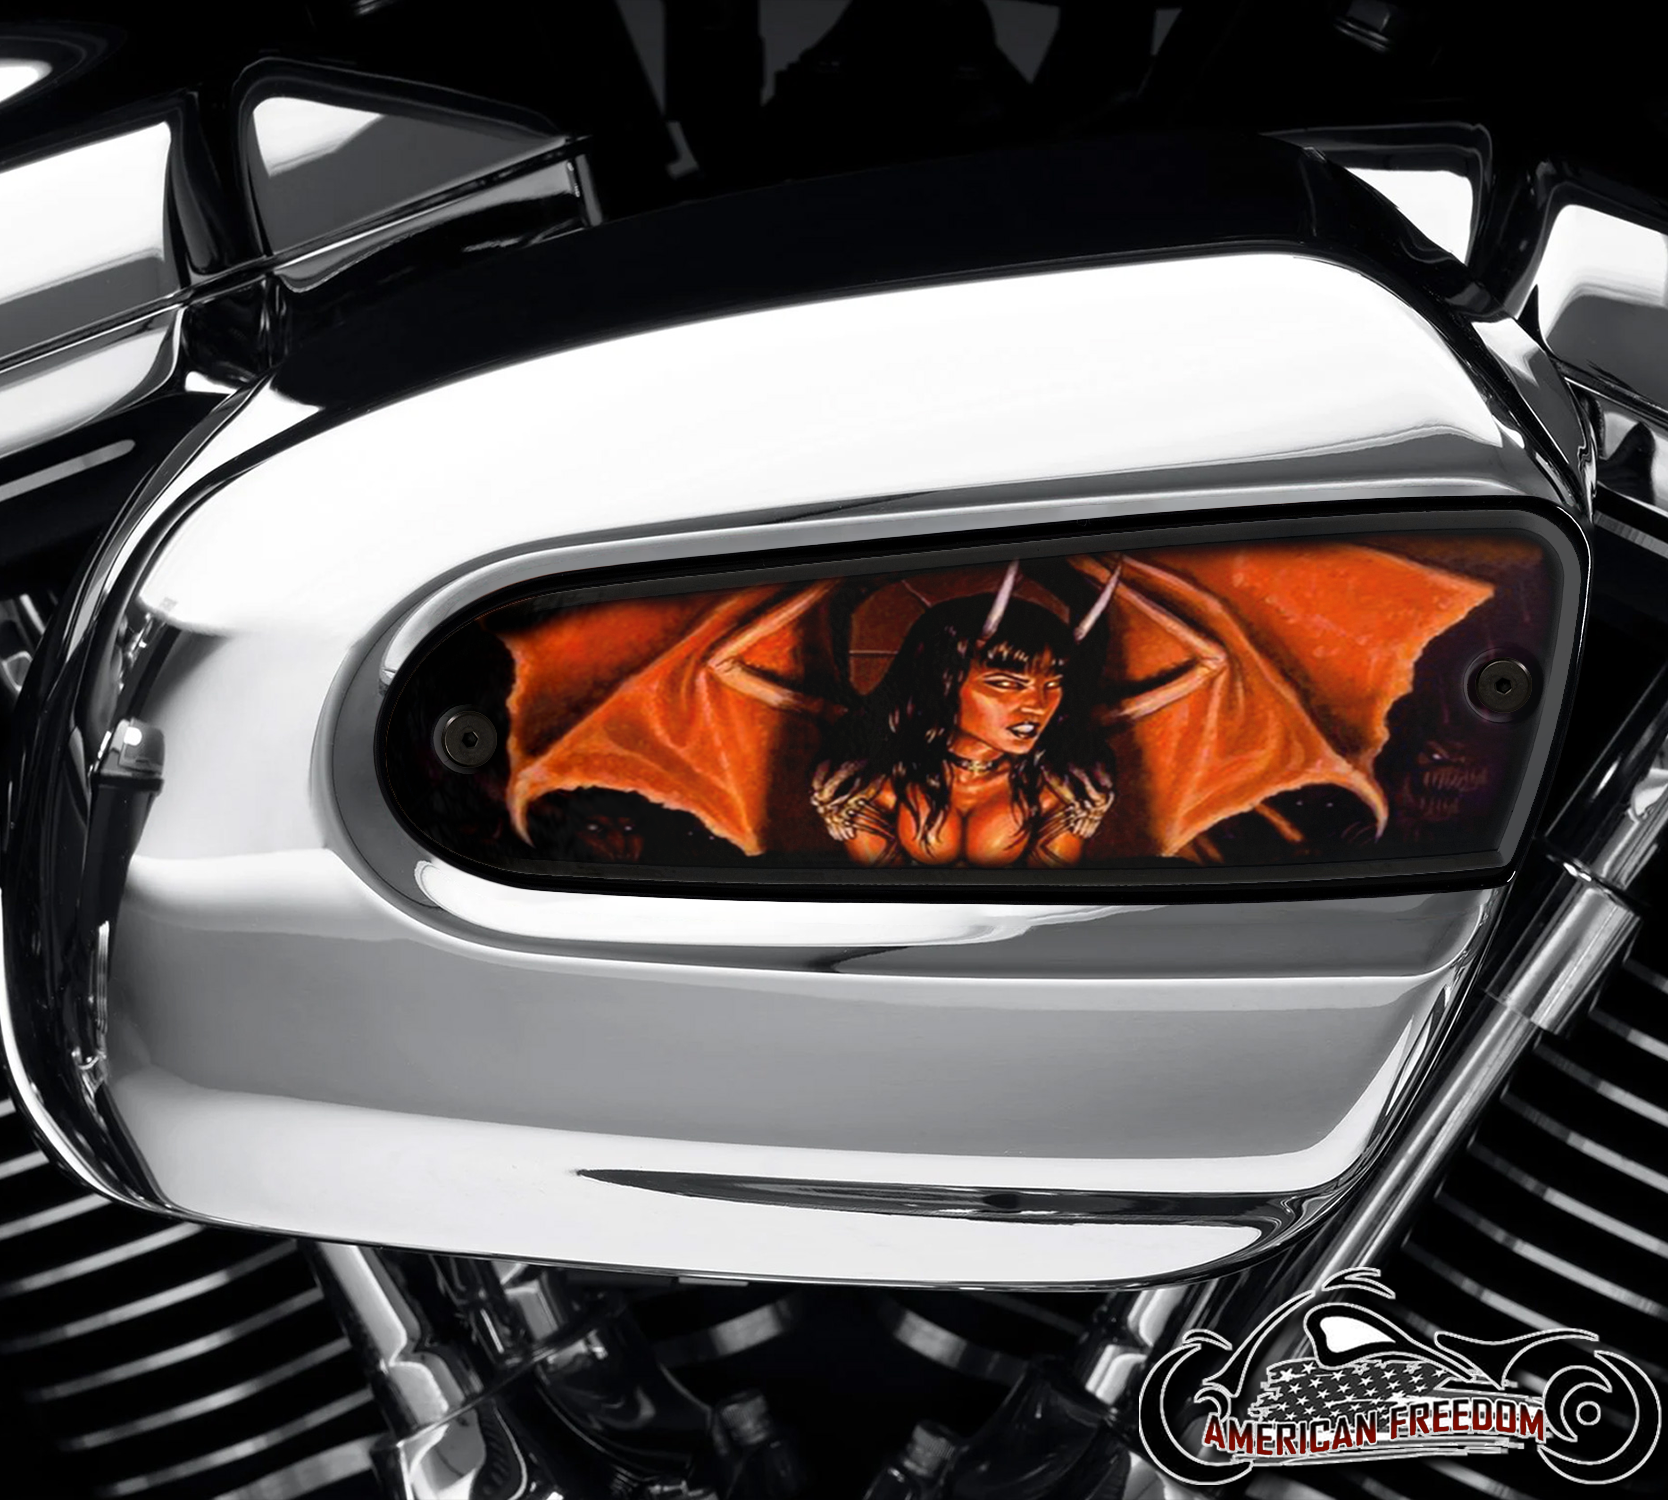 Harley Davidson Wedge Air Cleaner Insert - Red Demon Woman